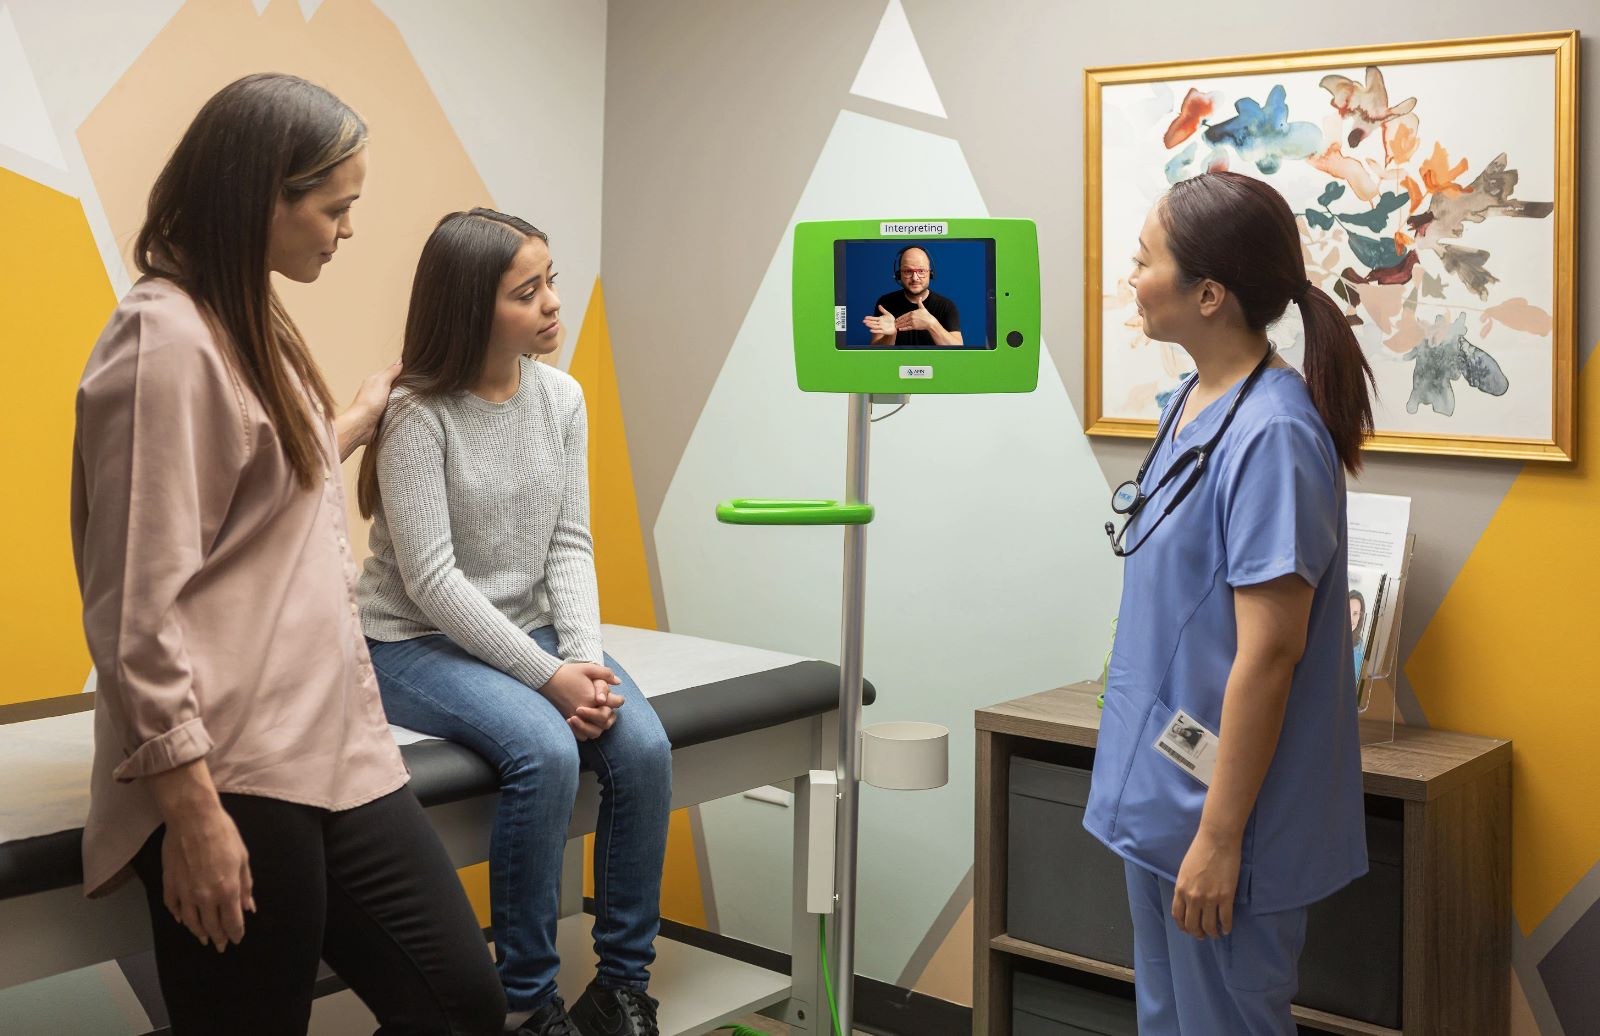 Virtual sign language interpretation in a healthcare setting